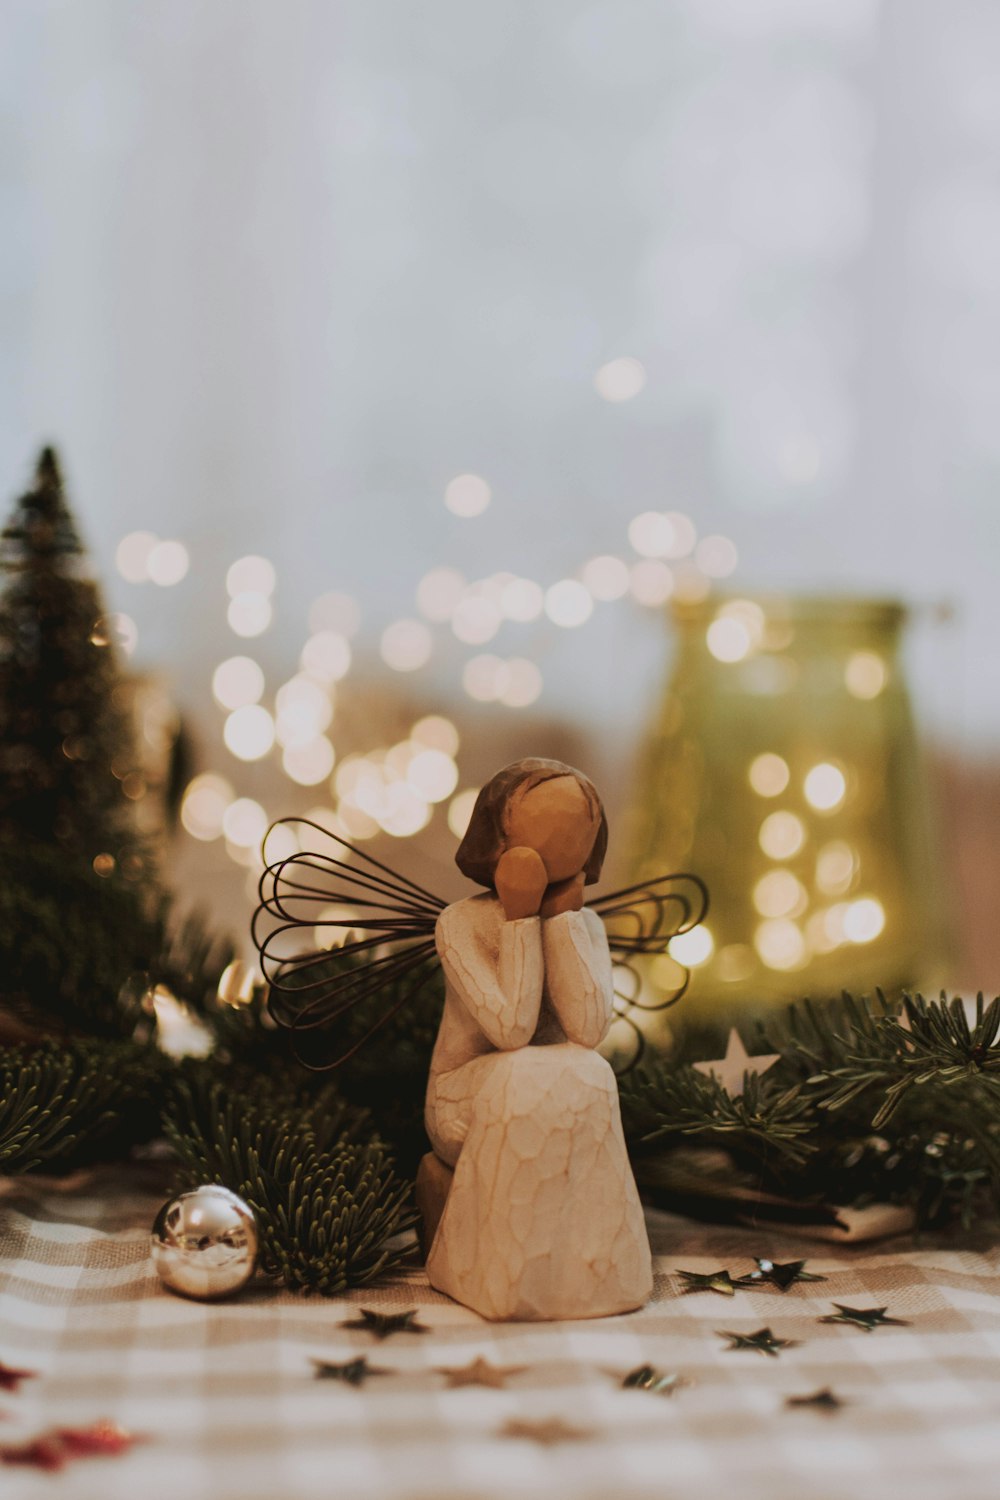 female angel sitting Willow Tree figurine near pine trees